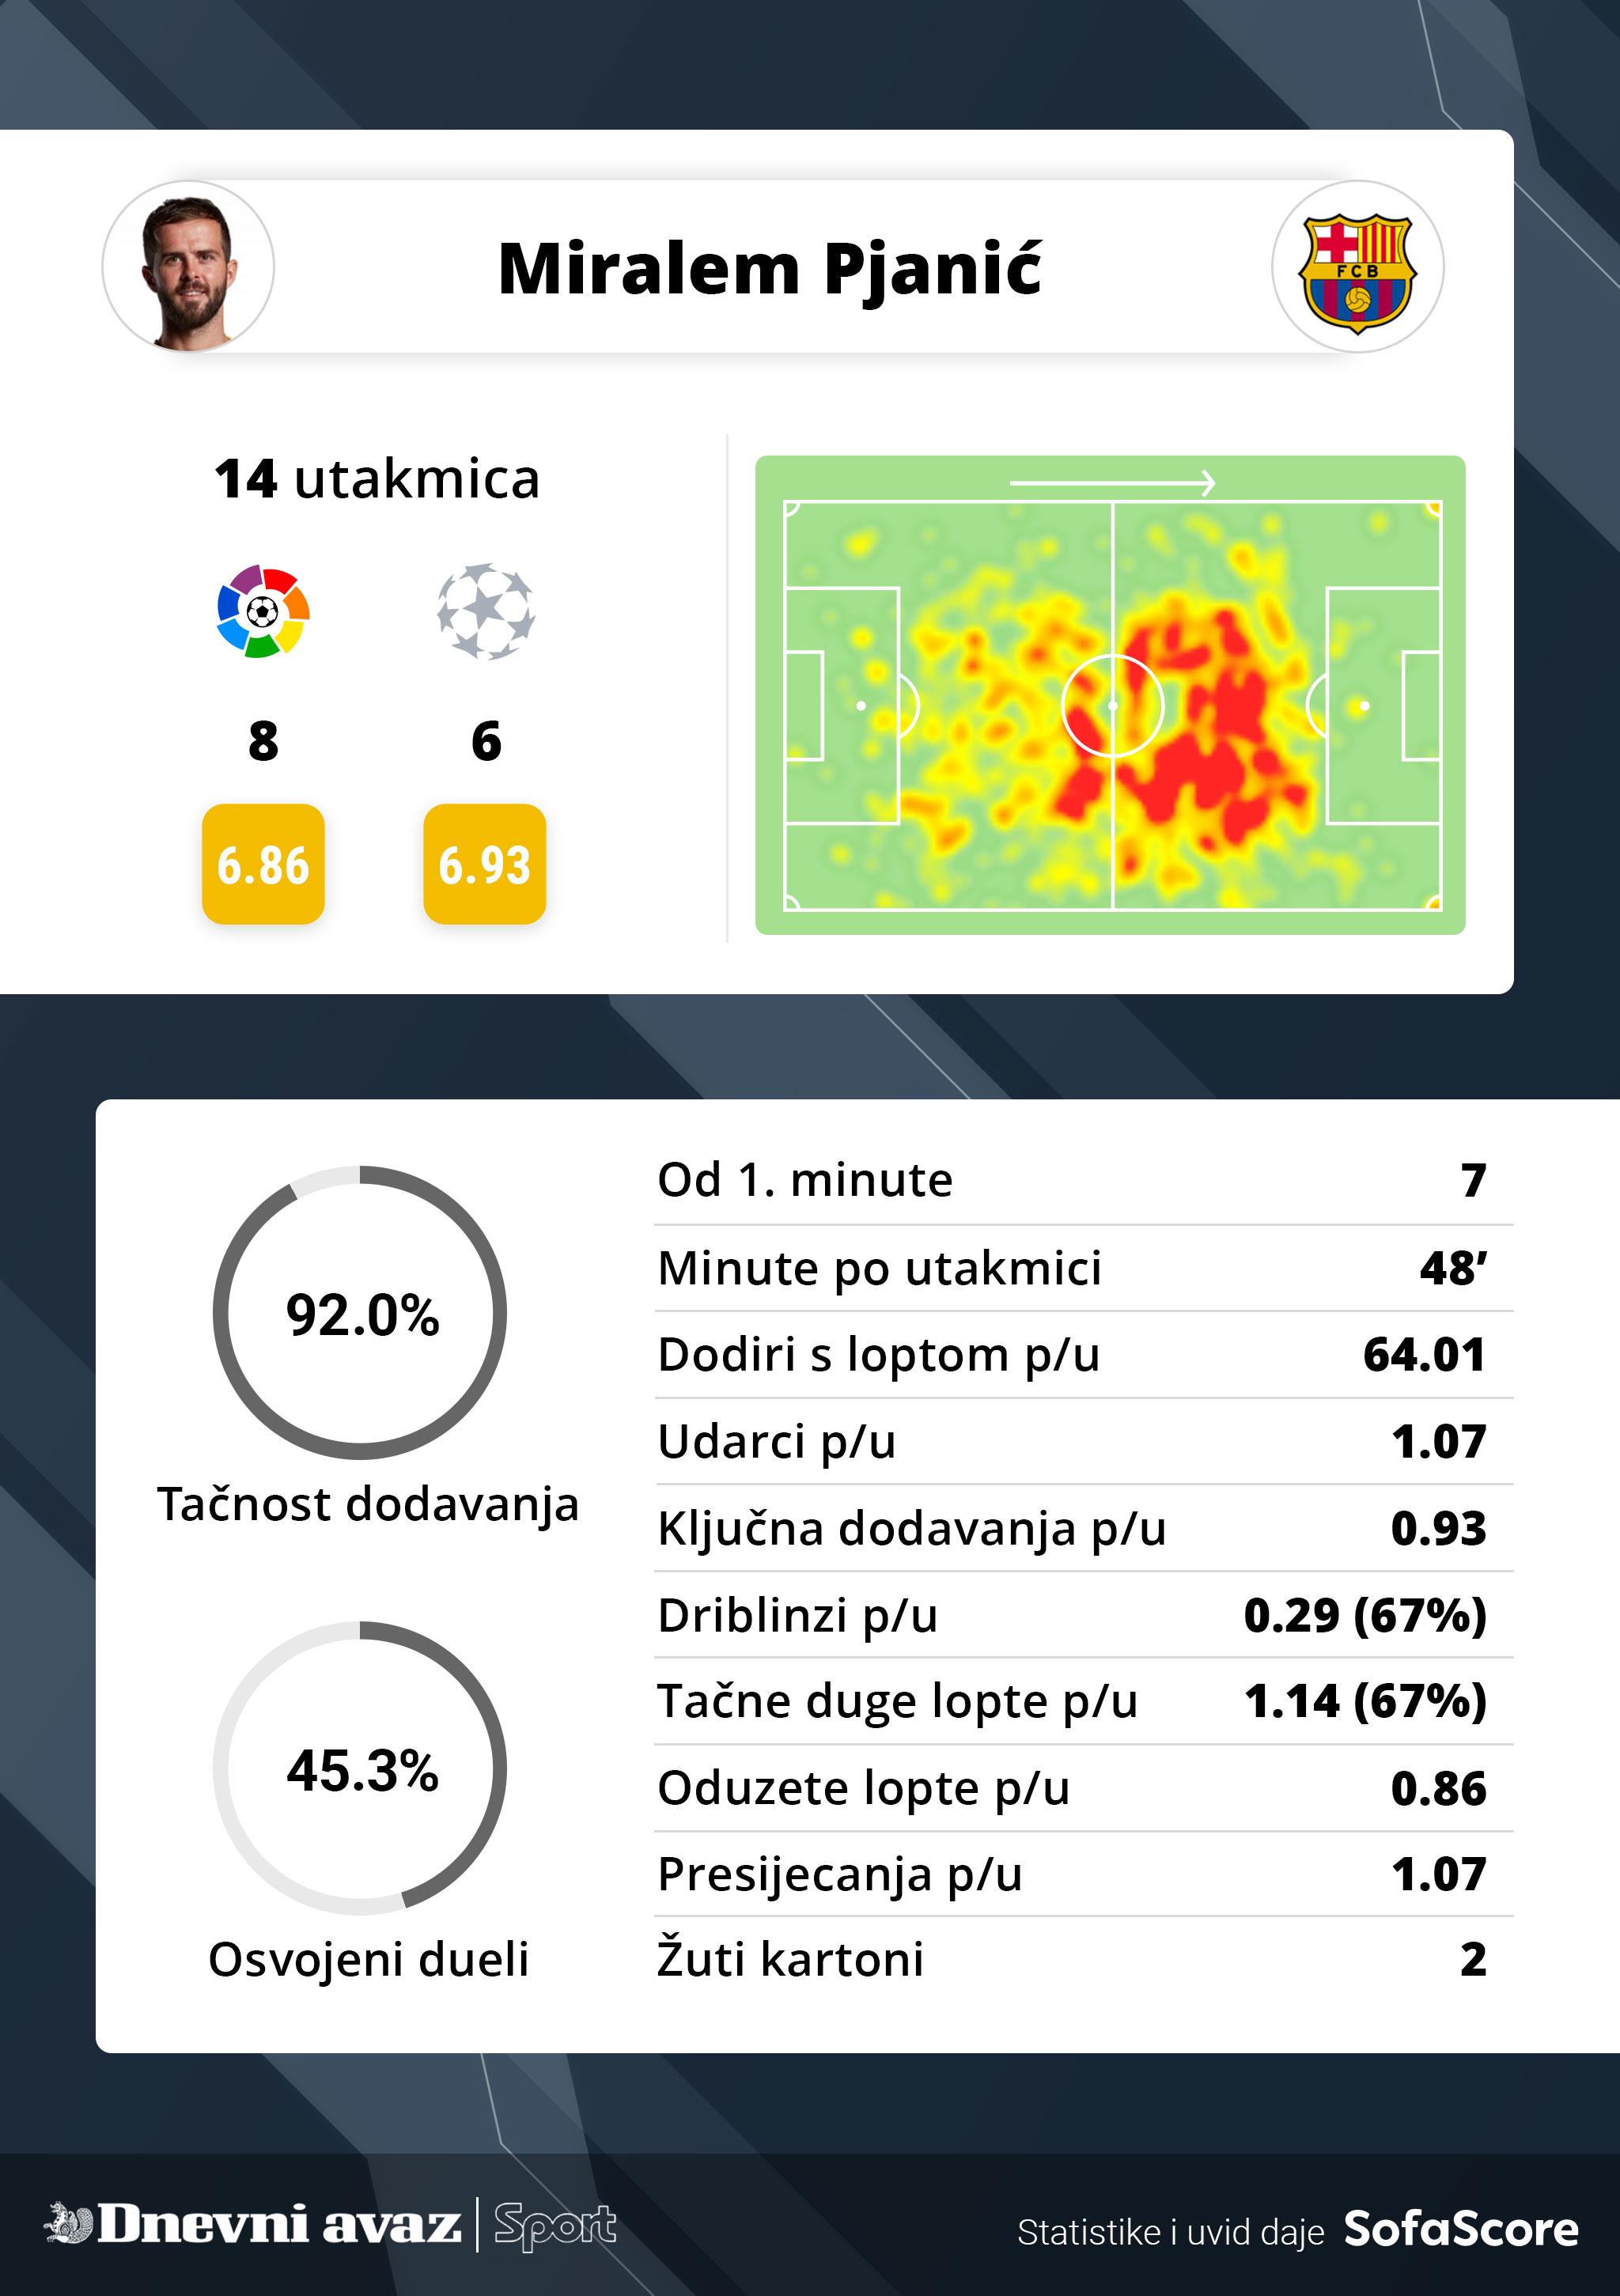 Pjanićeva statistika ove sezone - Avaz